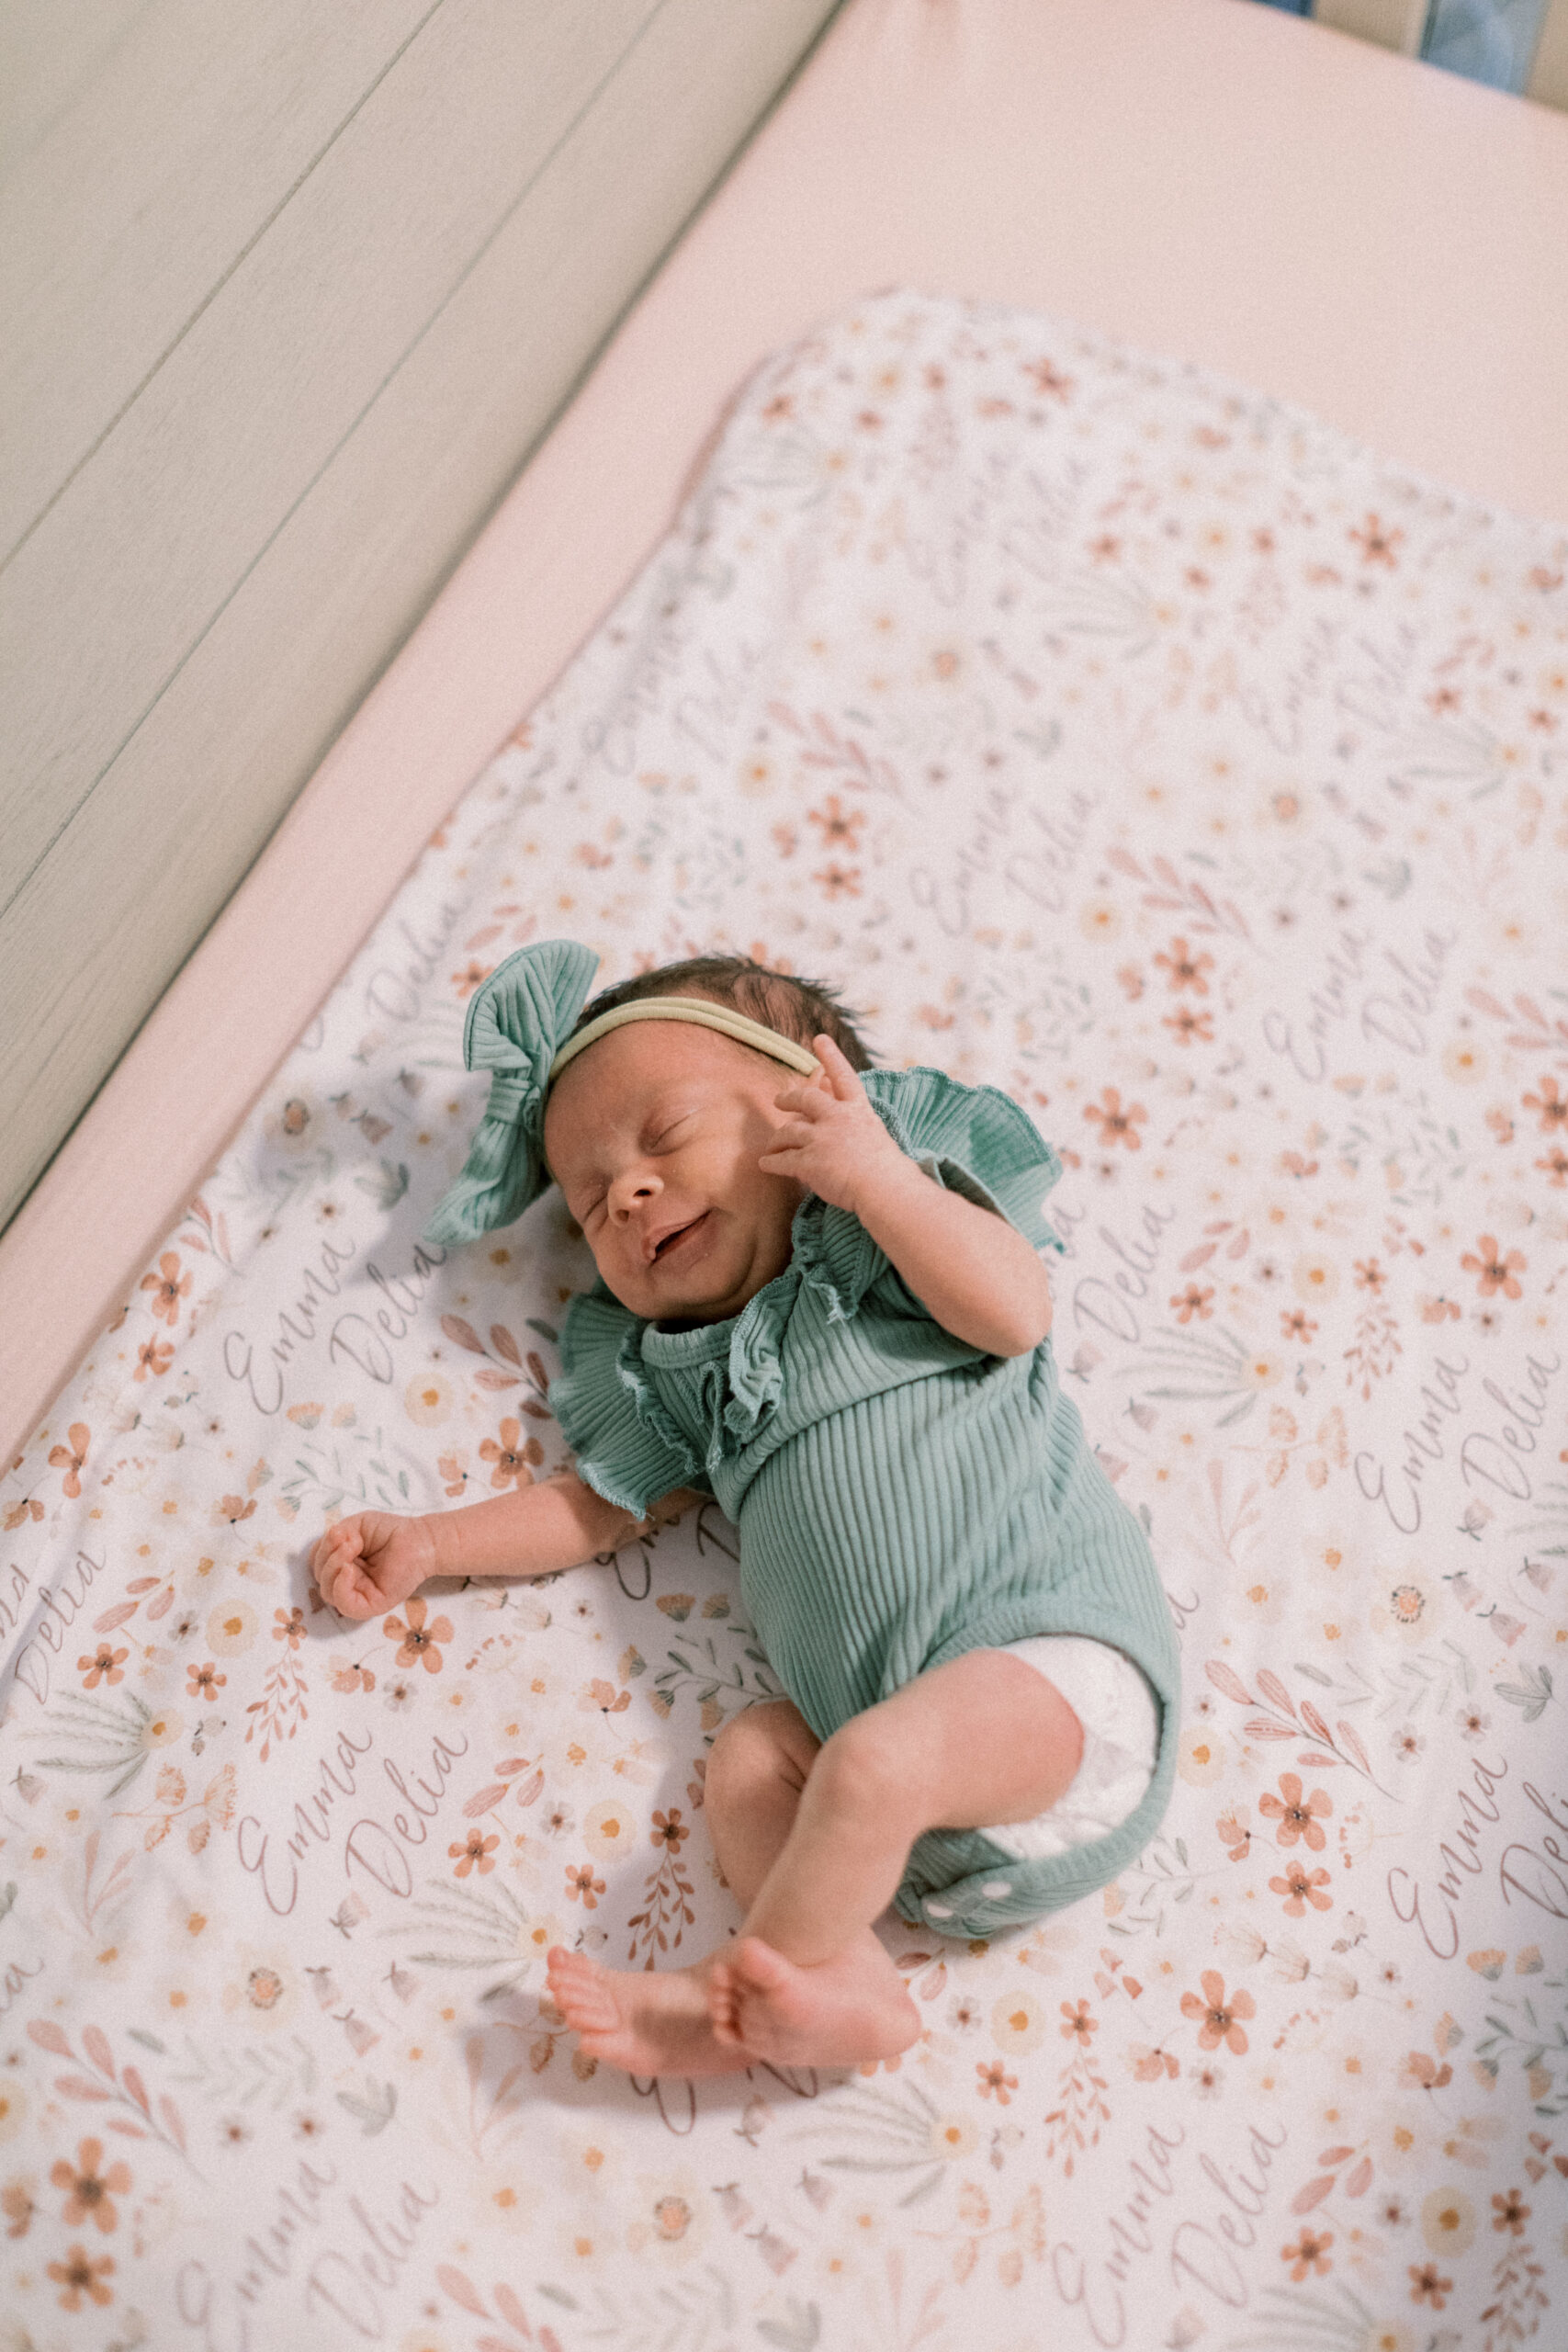 Maryland photographer captures newborn in crib